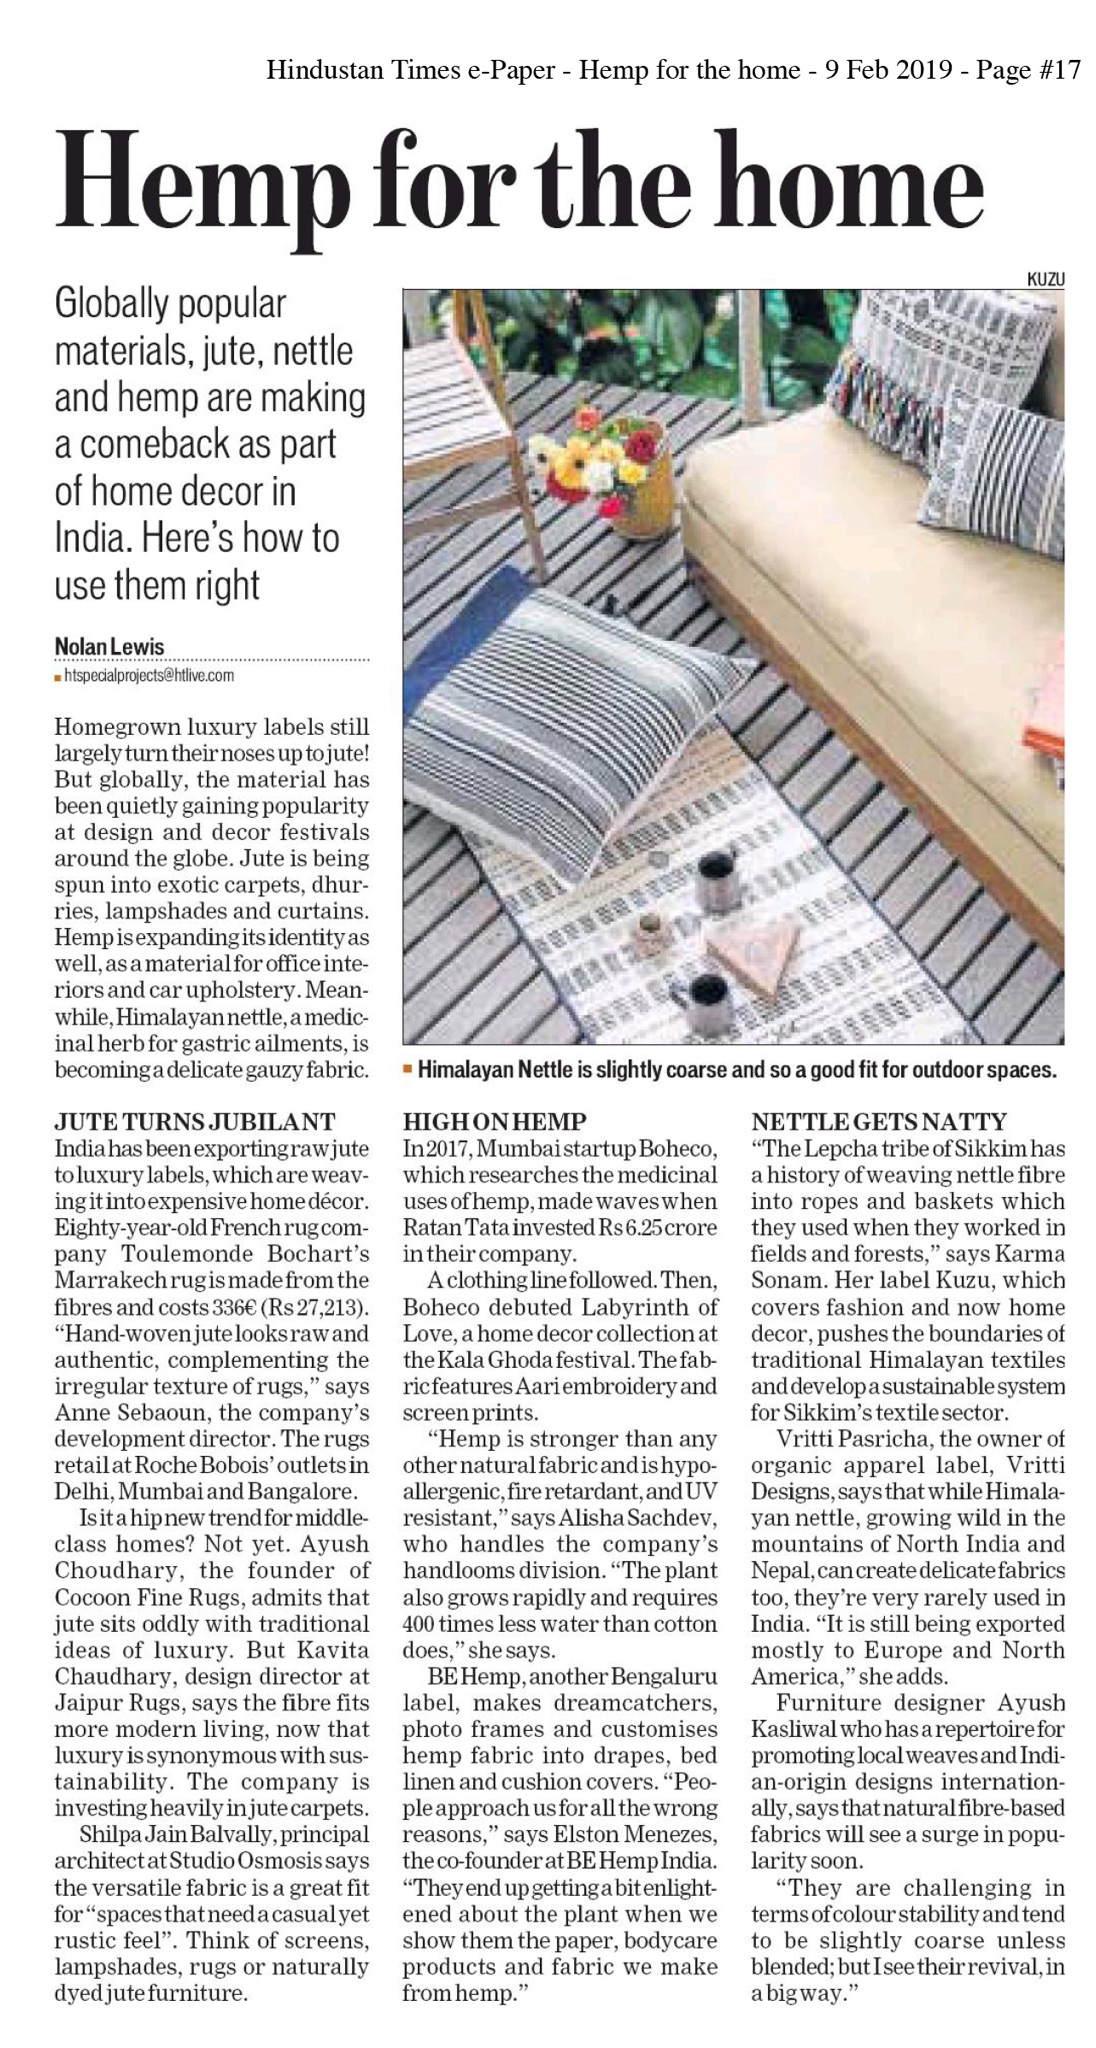 Hindustan Times – Hemp for the Home